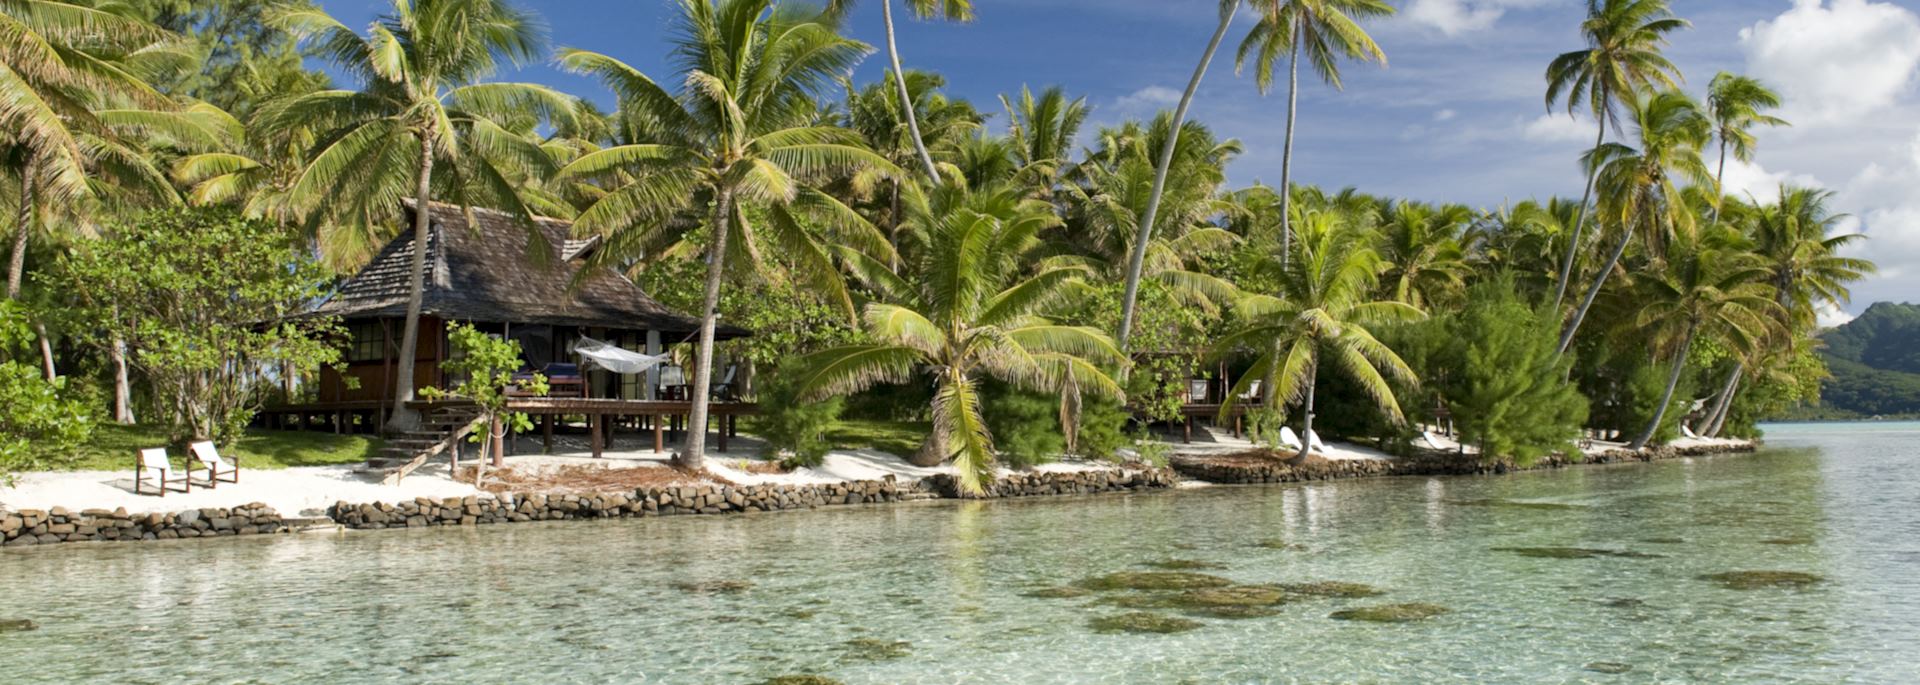 Vahine Island Private Island Resort, French Polynesia